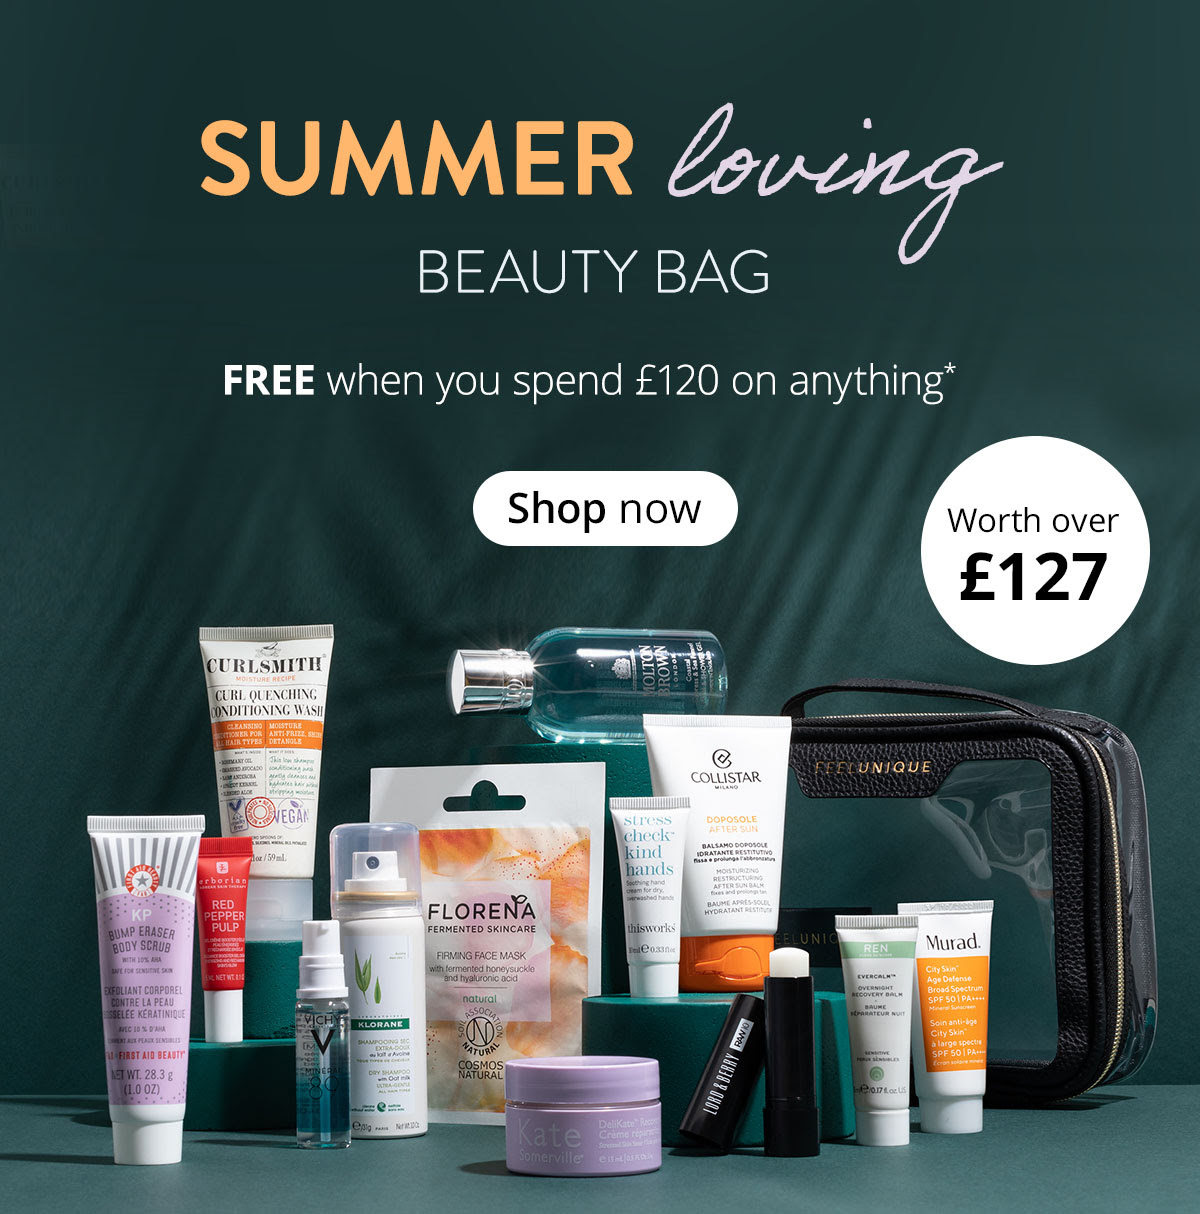 Summer loving beauty bag